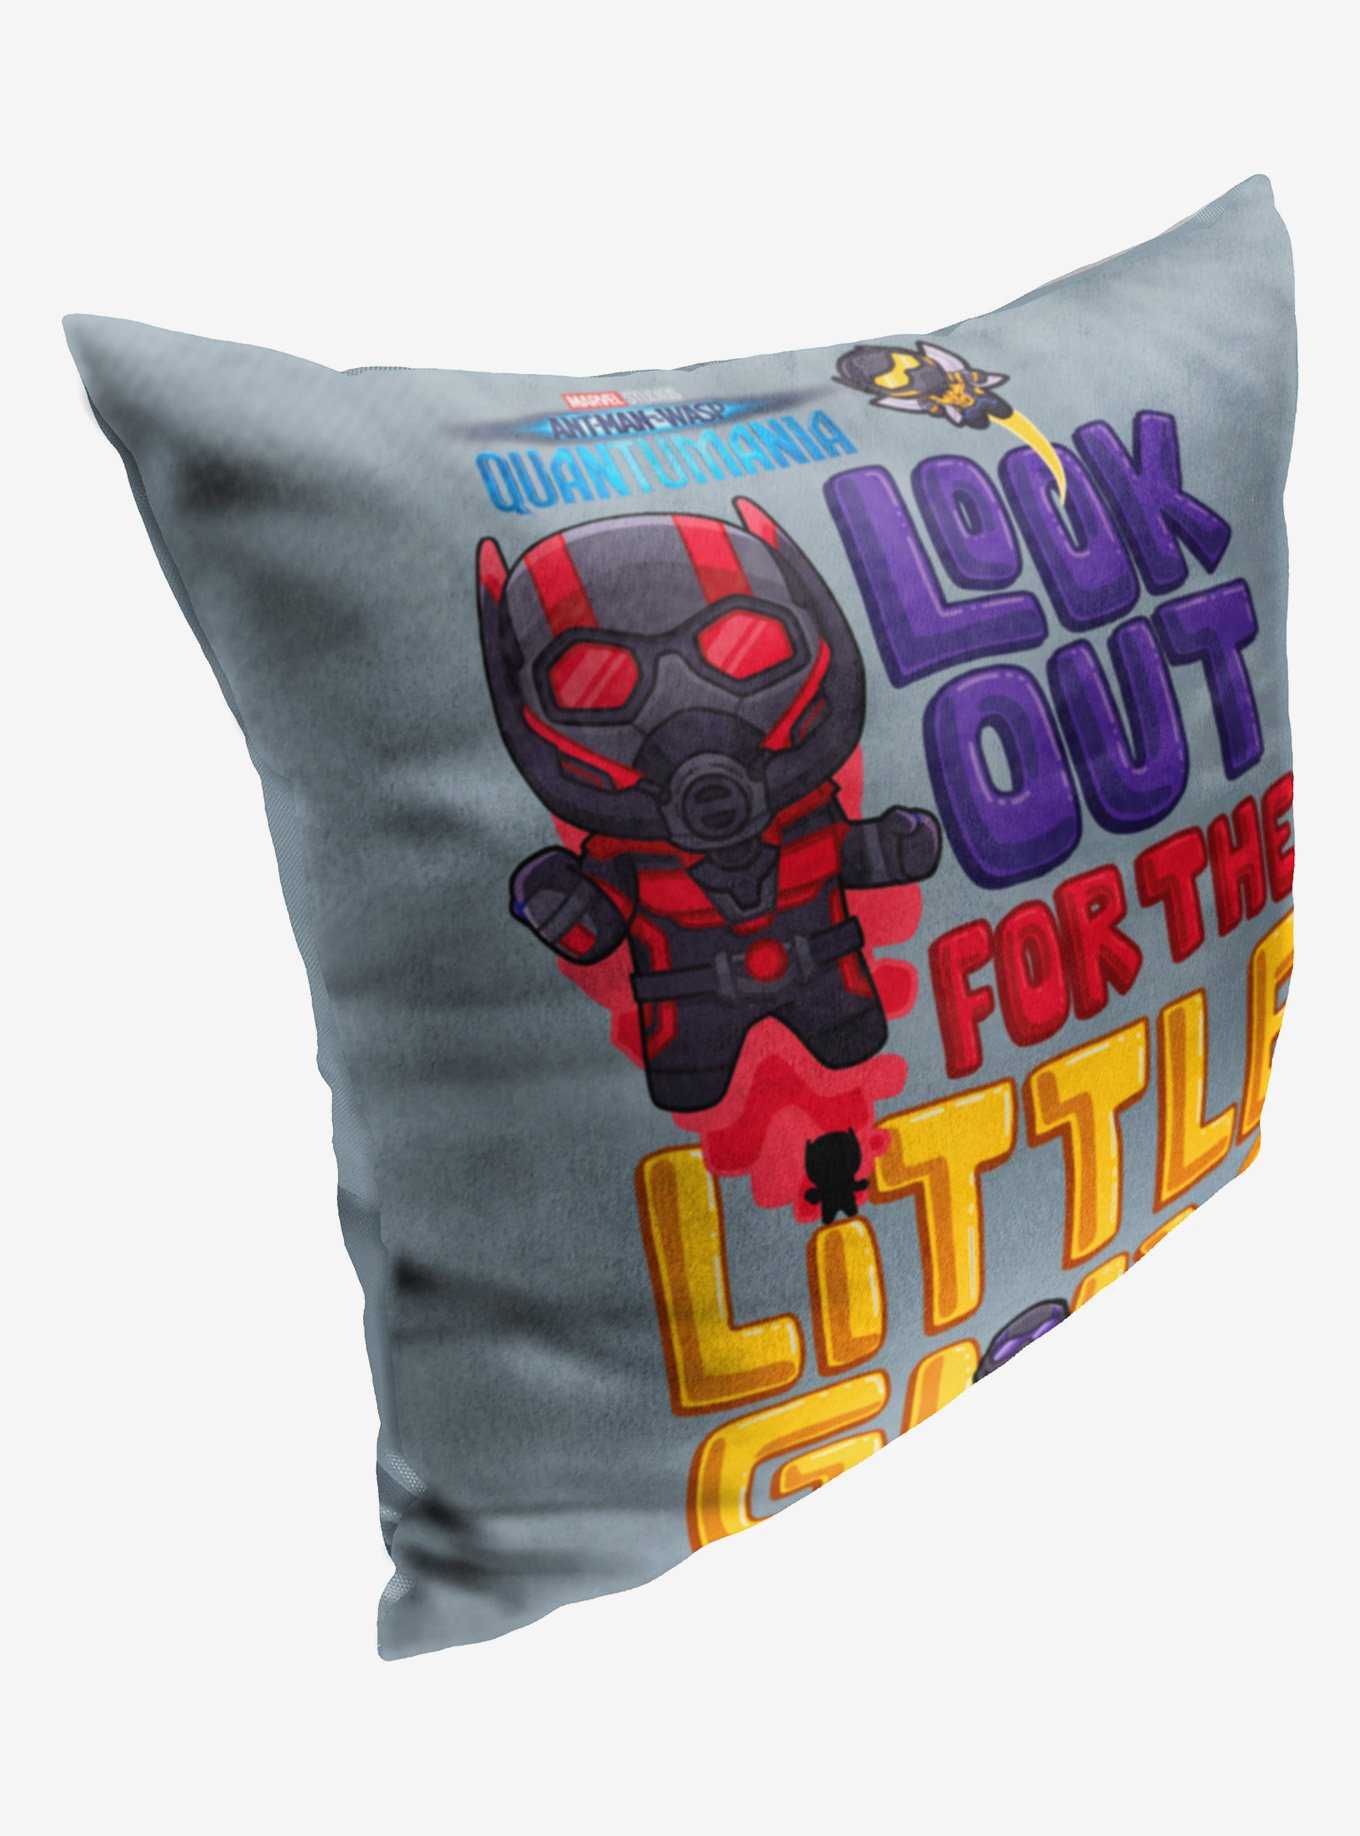 Marvel Ant Man Quantumania Little Guys Printed Throw Pillow, , hi-res